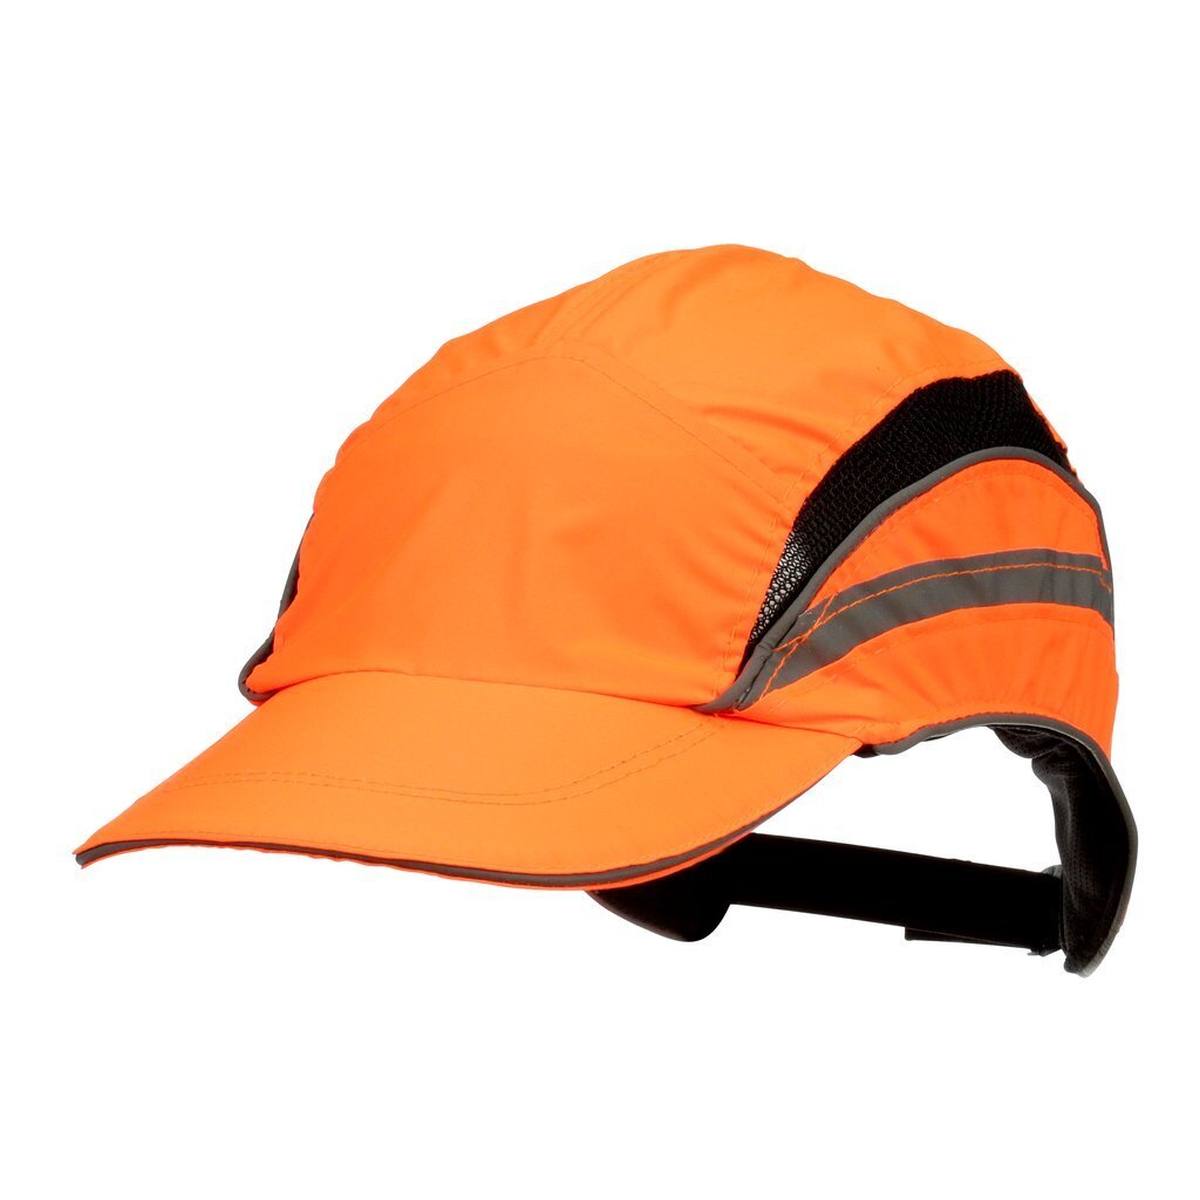 3M Scott First Base 3 Classic - bump cap, signaalin väri oranssi - vakiohuippu 70 mm, EN812